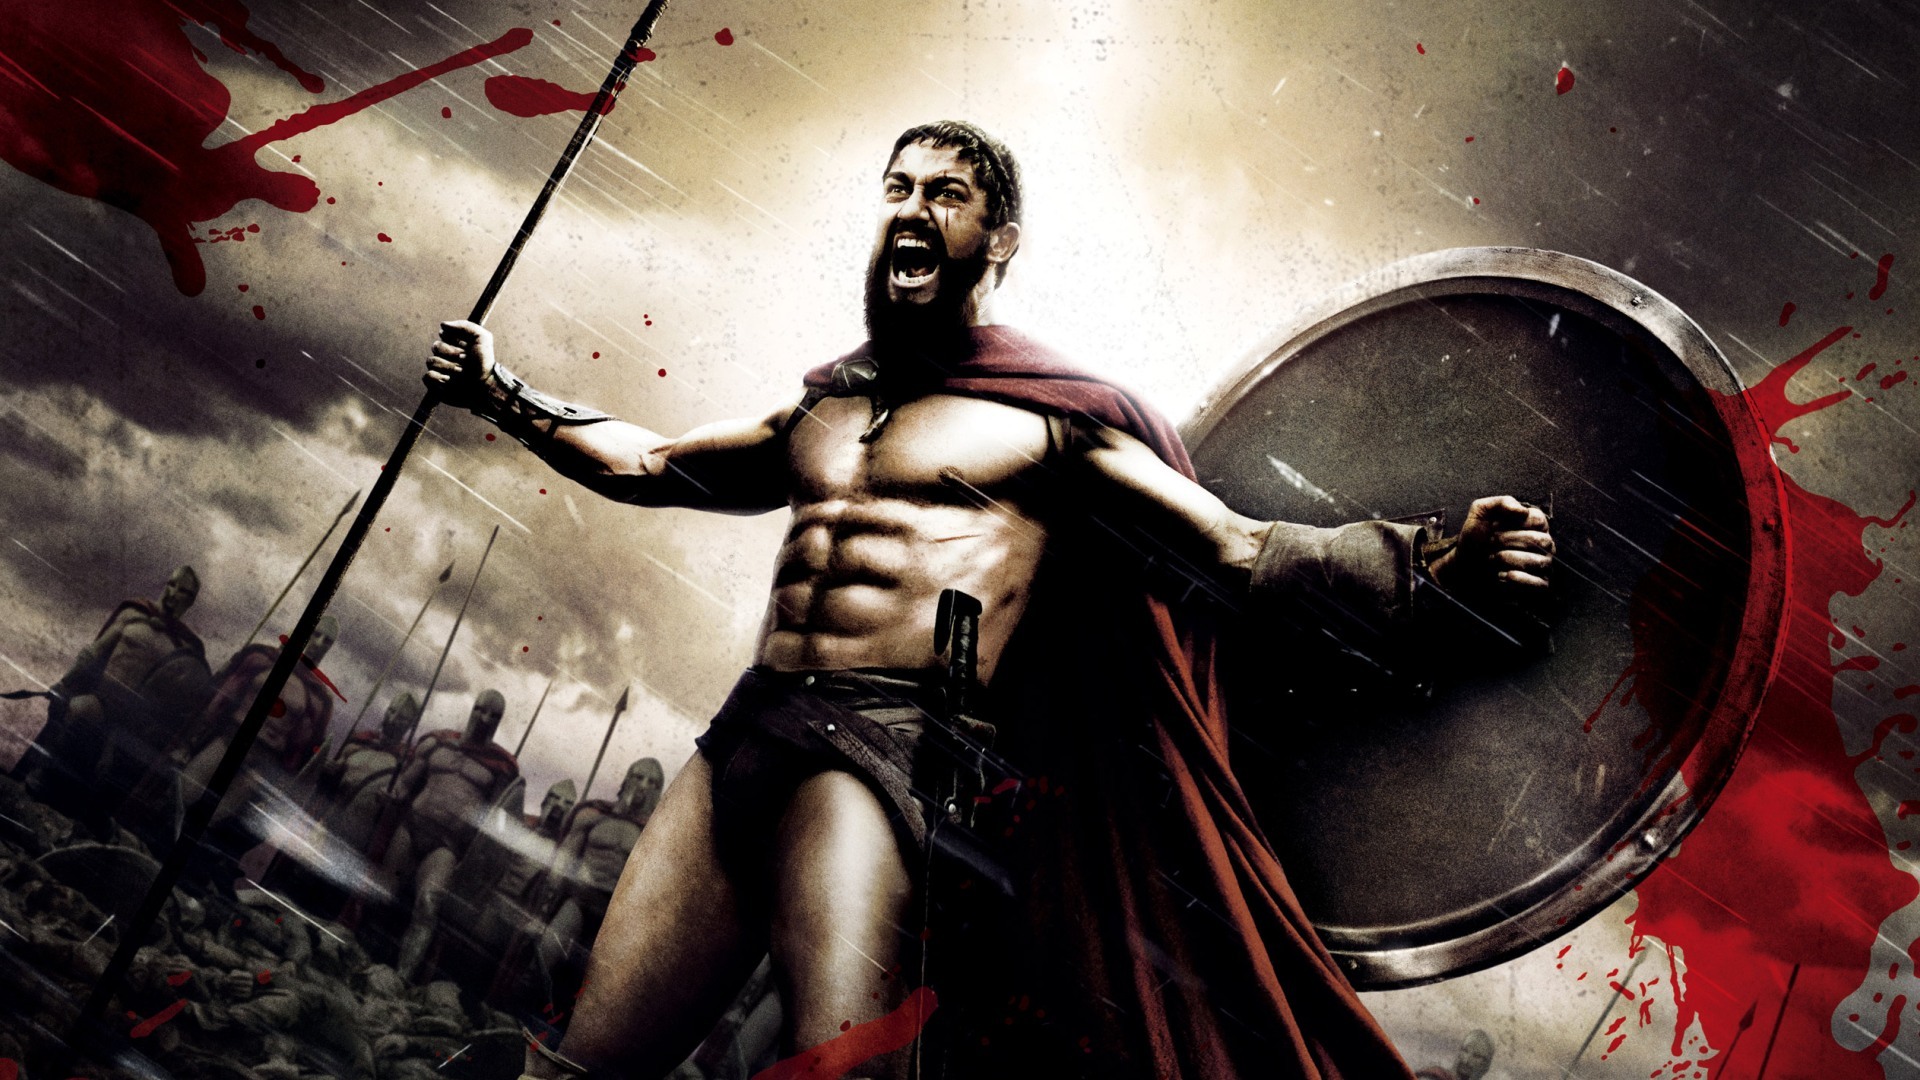 Gerard Butler portraying King Leonidas in the movie 300.